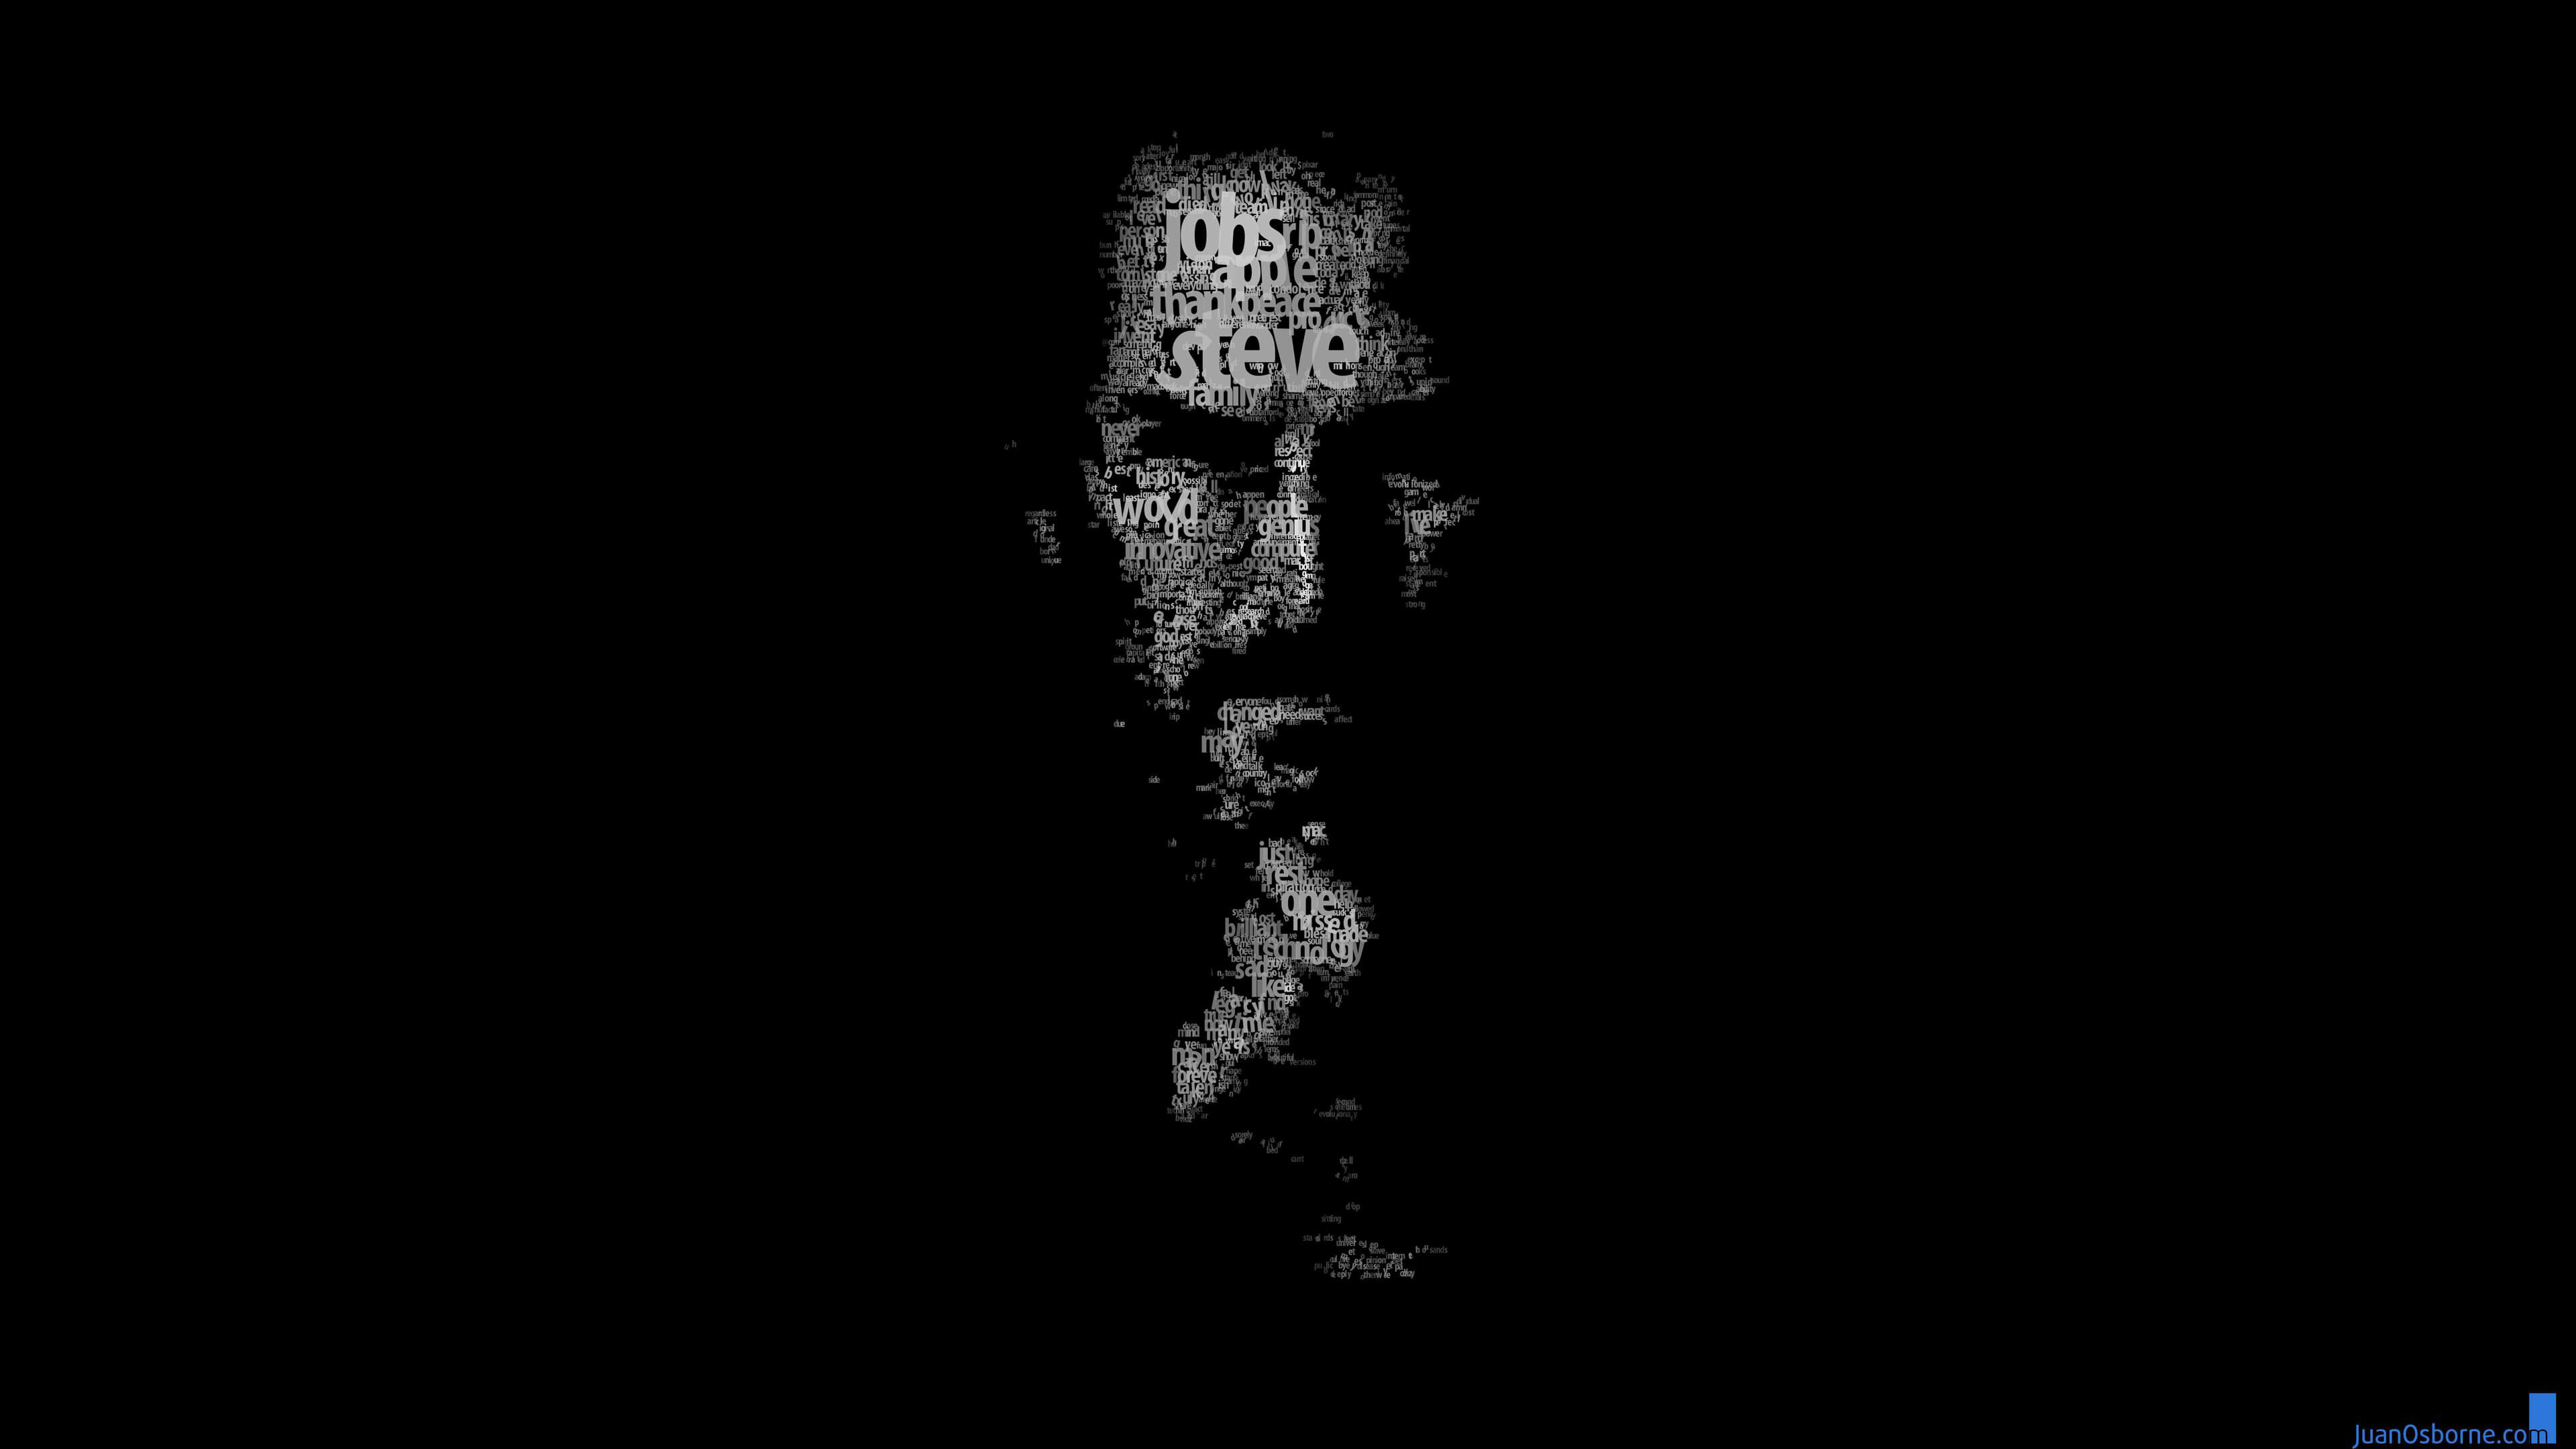 Typeface Portrait Of Steve Jobs HD Wallpaper For 4k X